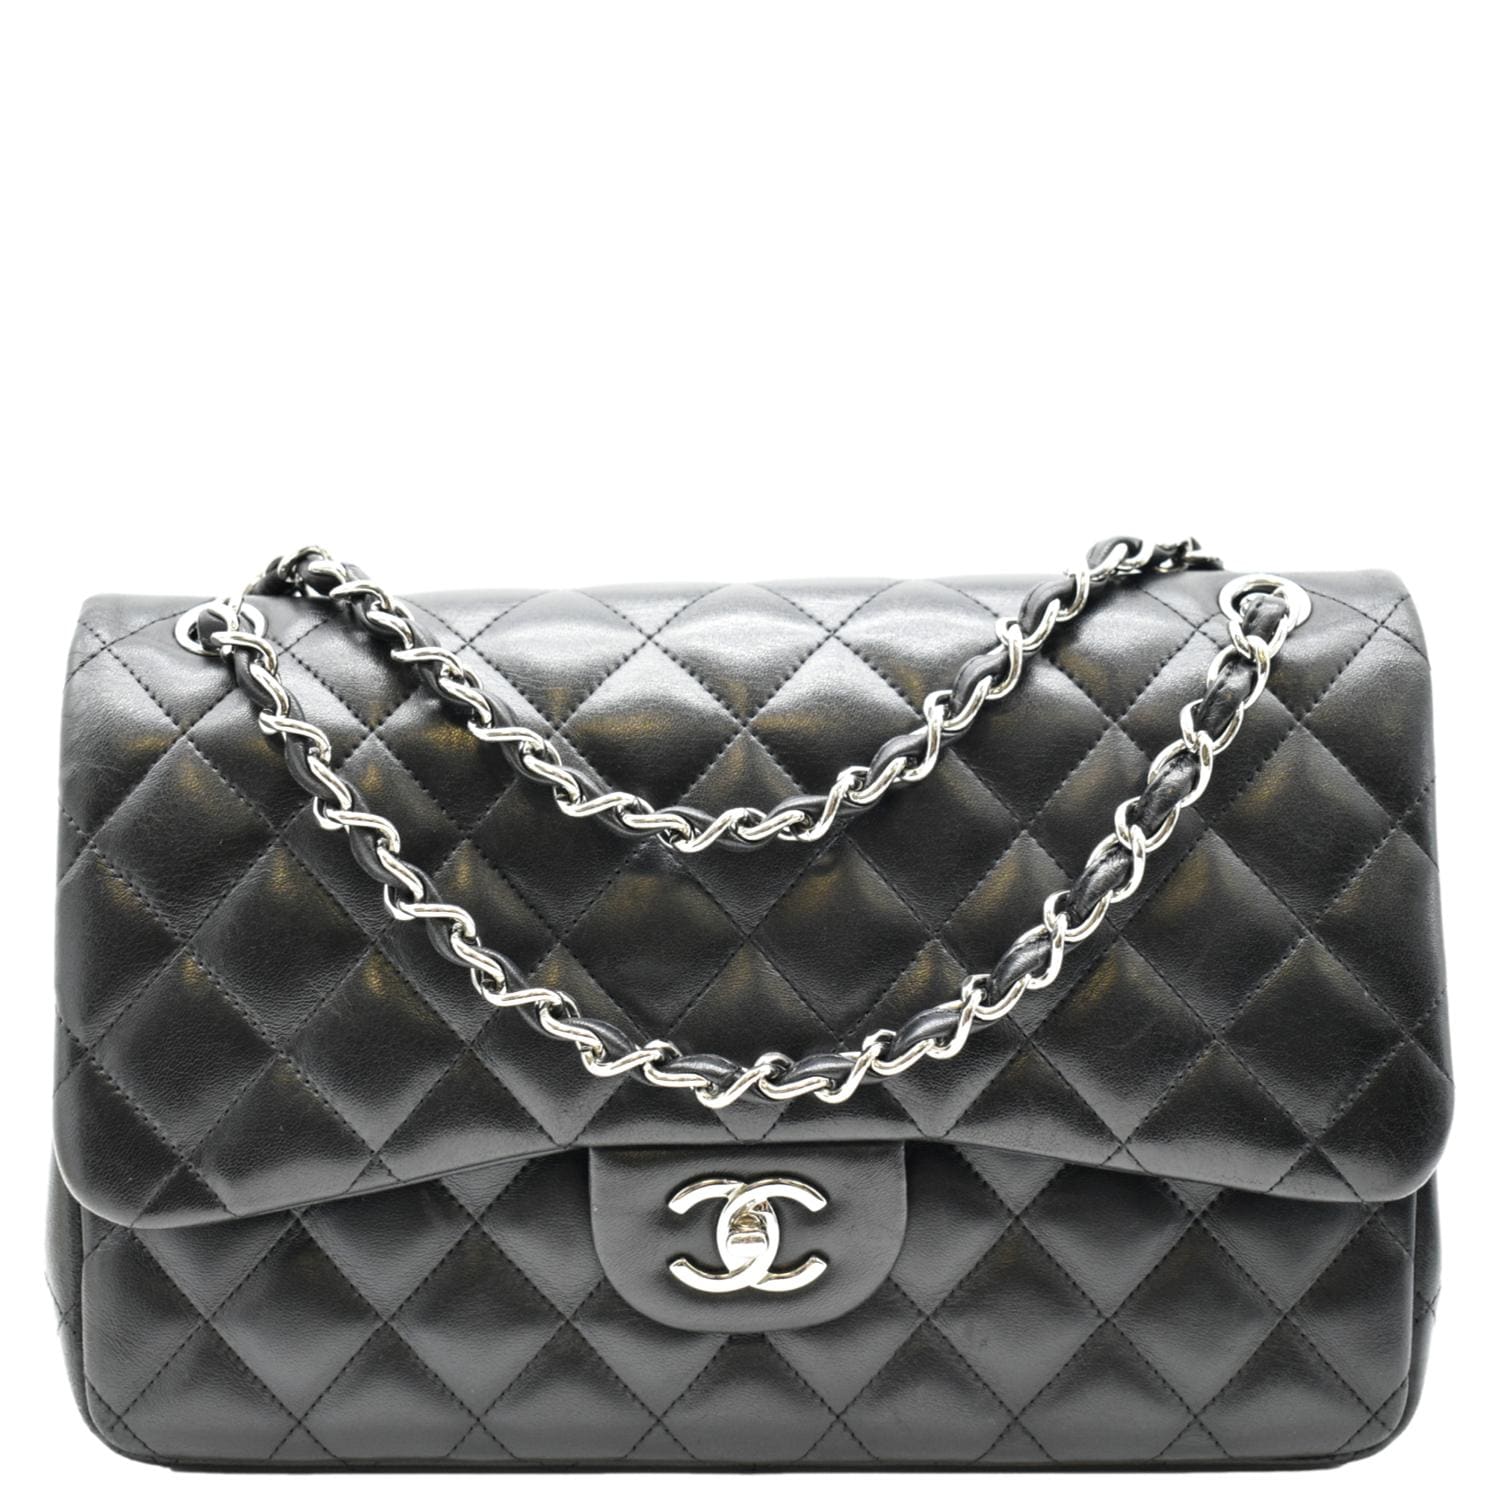 Chanel Jumbo classic flap bag black caviar silver hardware, black